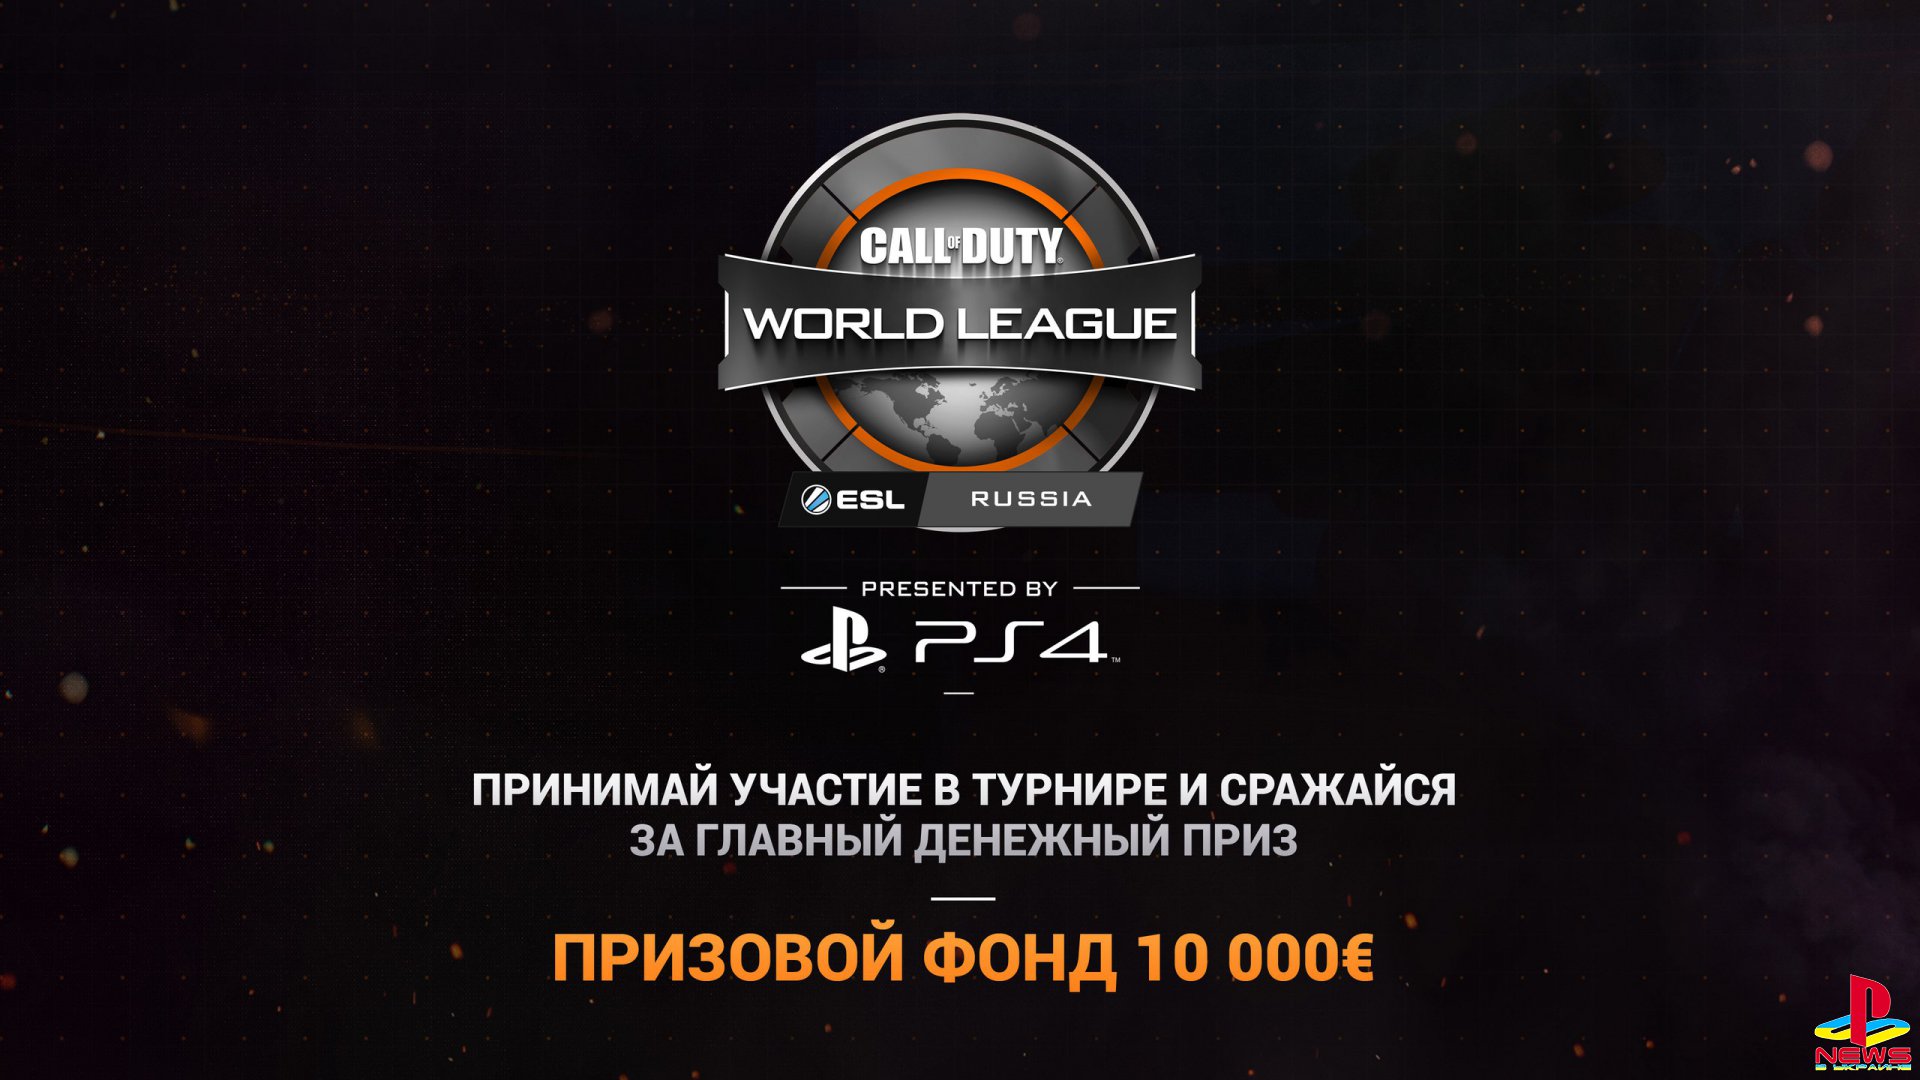     Call of Duty World League